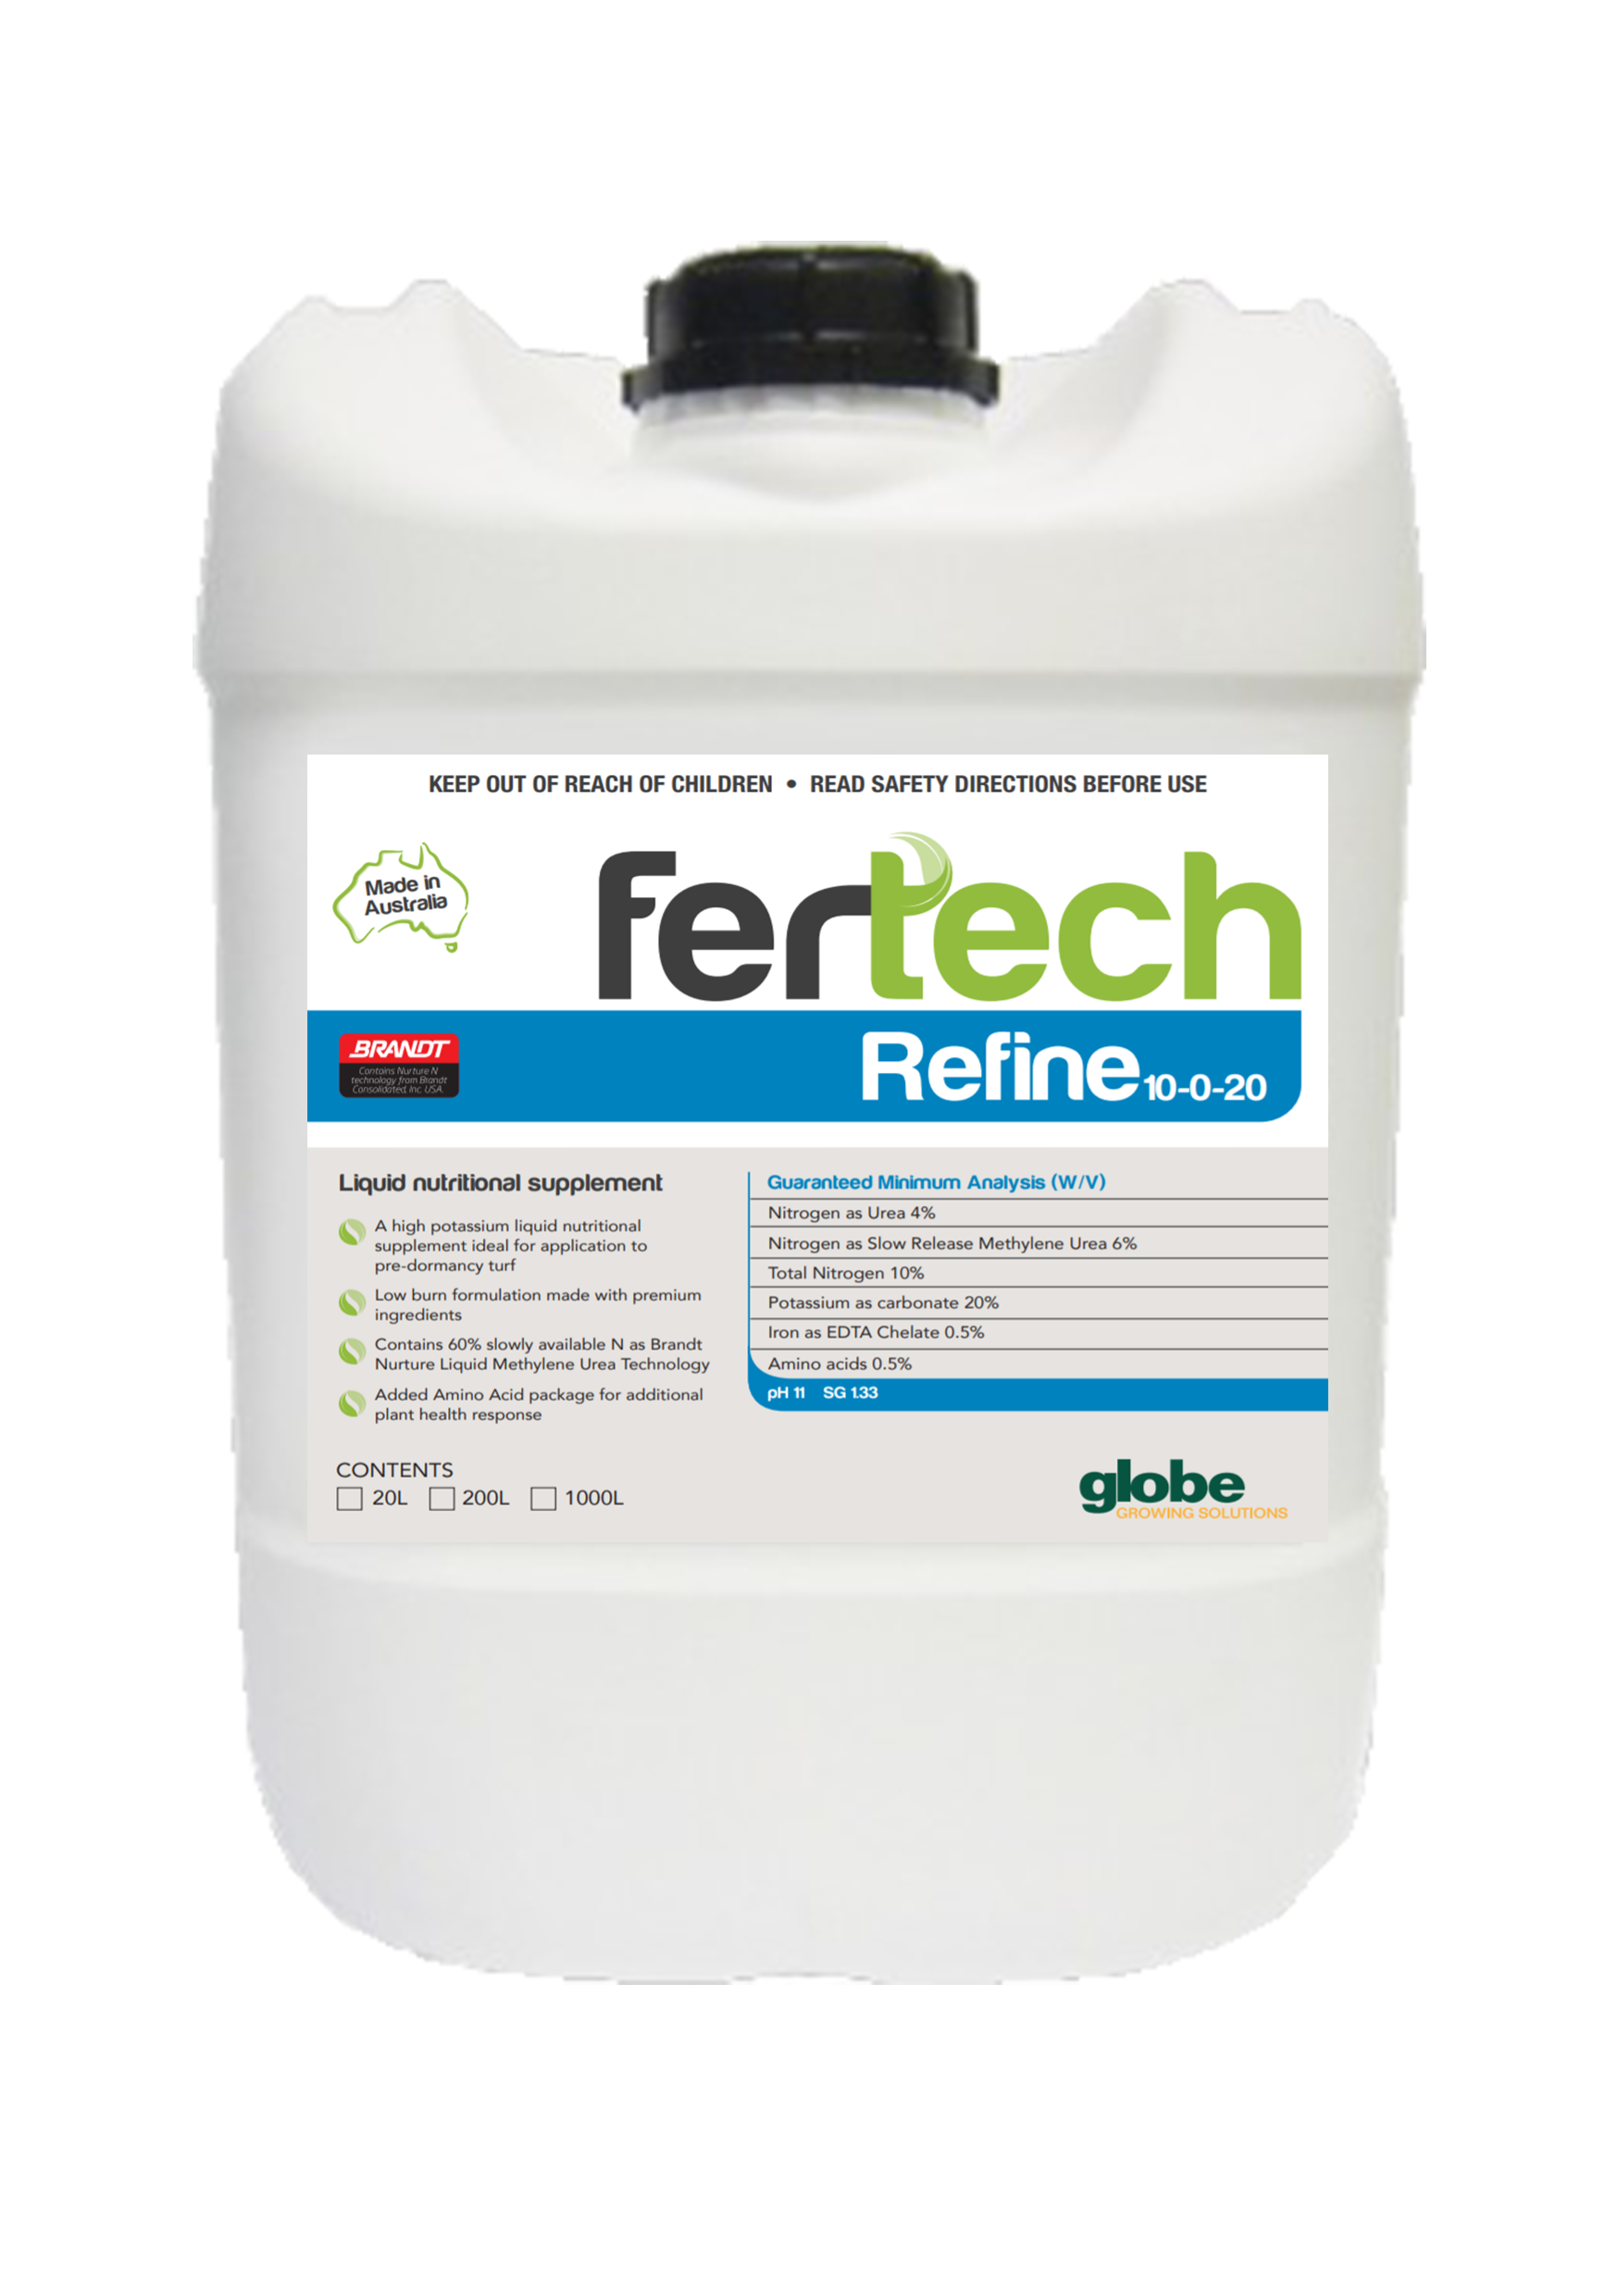 fertech-refine-packshot